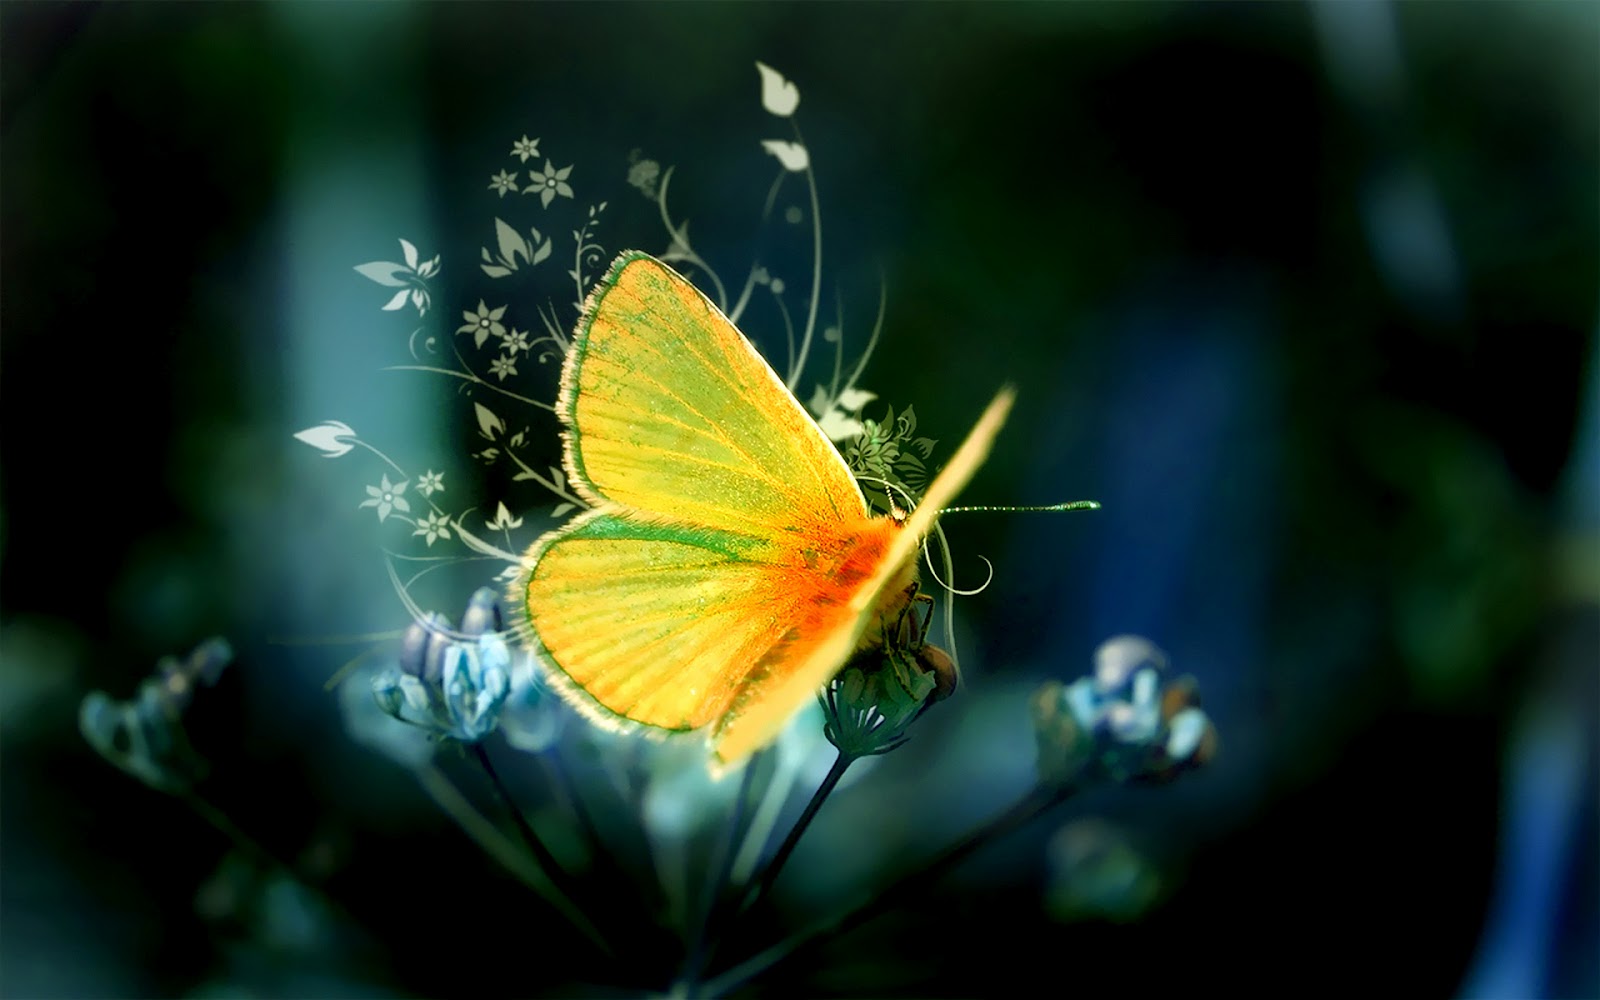 http://4.bp.blogspot.com/-typja3pjg8U/UER5nCkByHI/AAAAAAAAF2E/nIdtHy6dB1U/s1600/hd-vlinder-achtergrond-met-een-mooie-gele-vlinder-op-een-bloem-hd-vlinder-wallpaper-foto.jpg